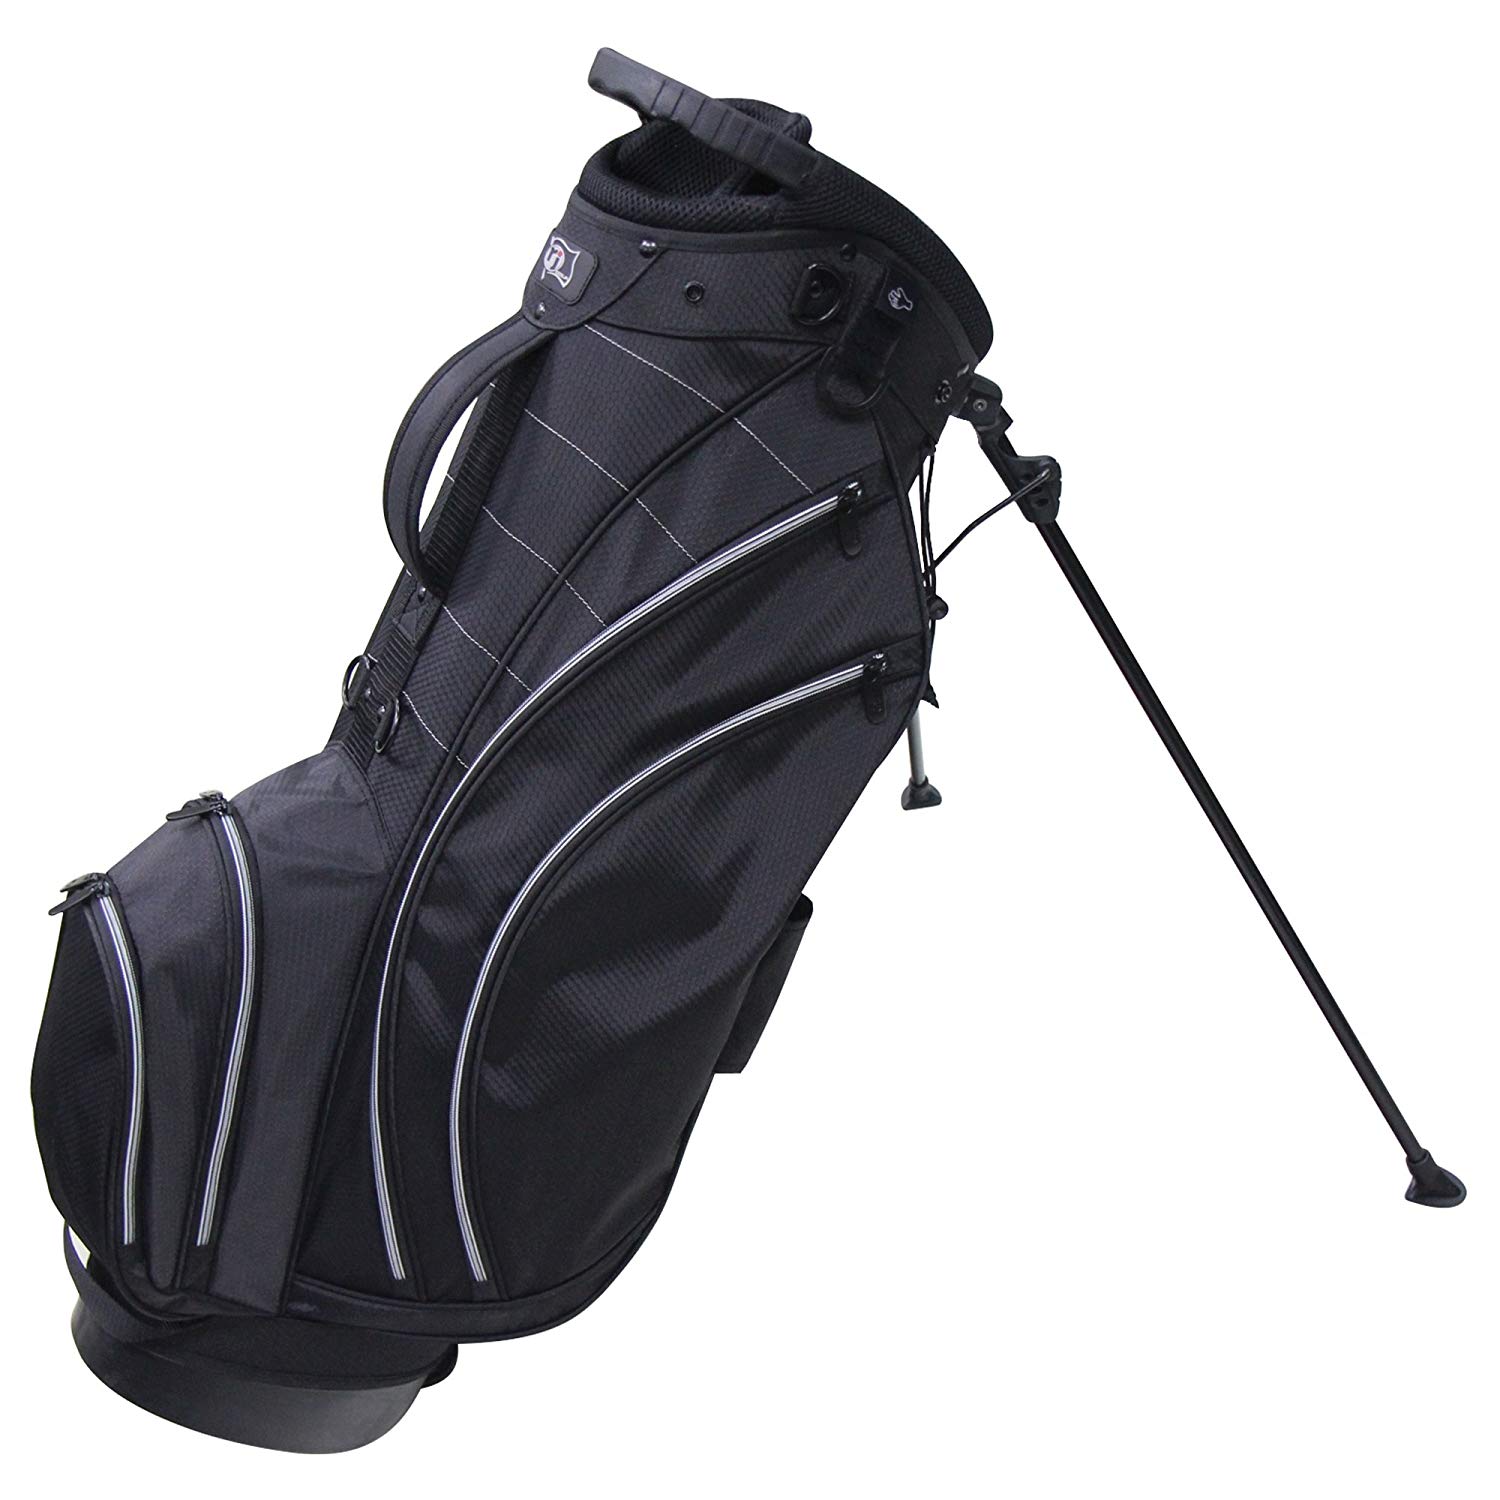 RJ Sports SB-495 Golf Stand Bags